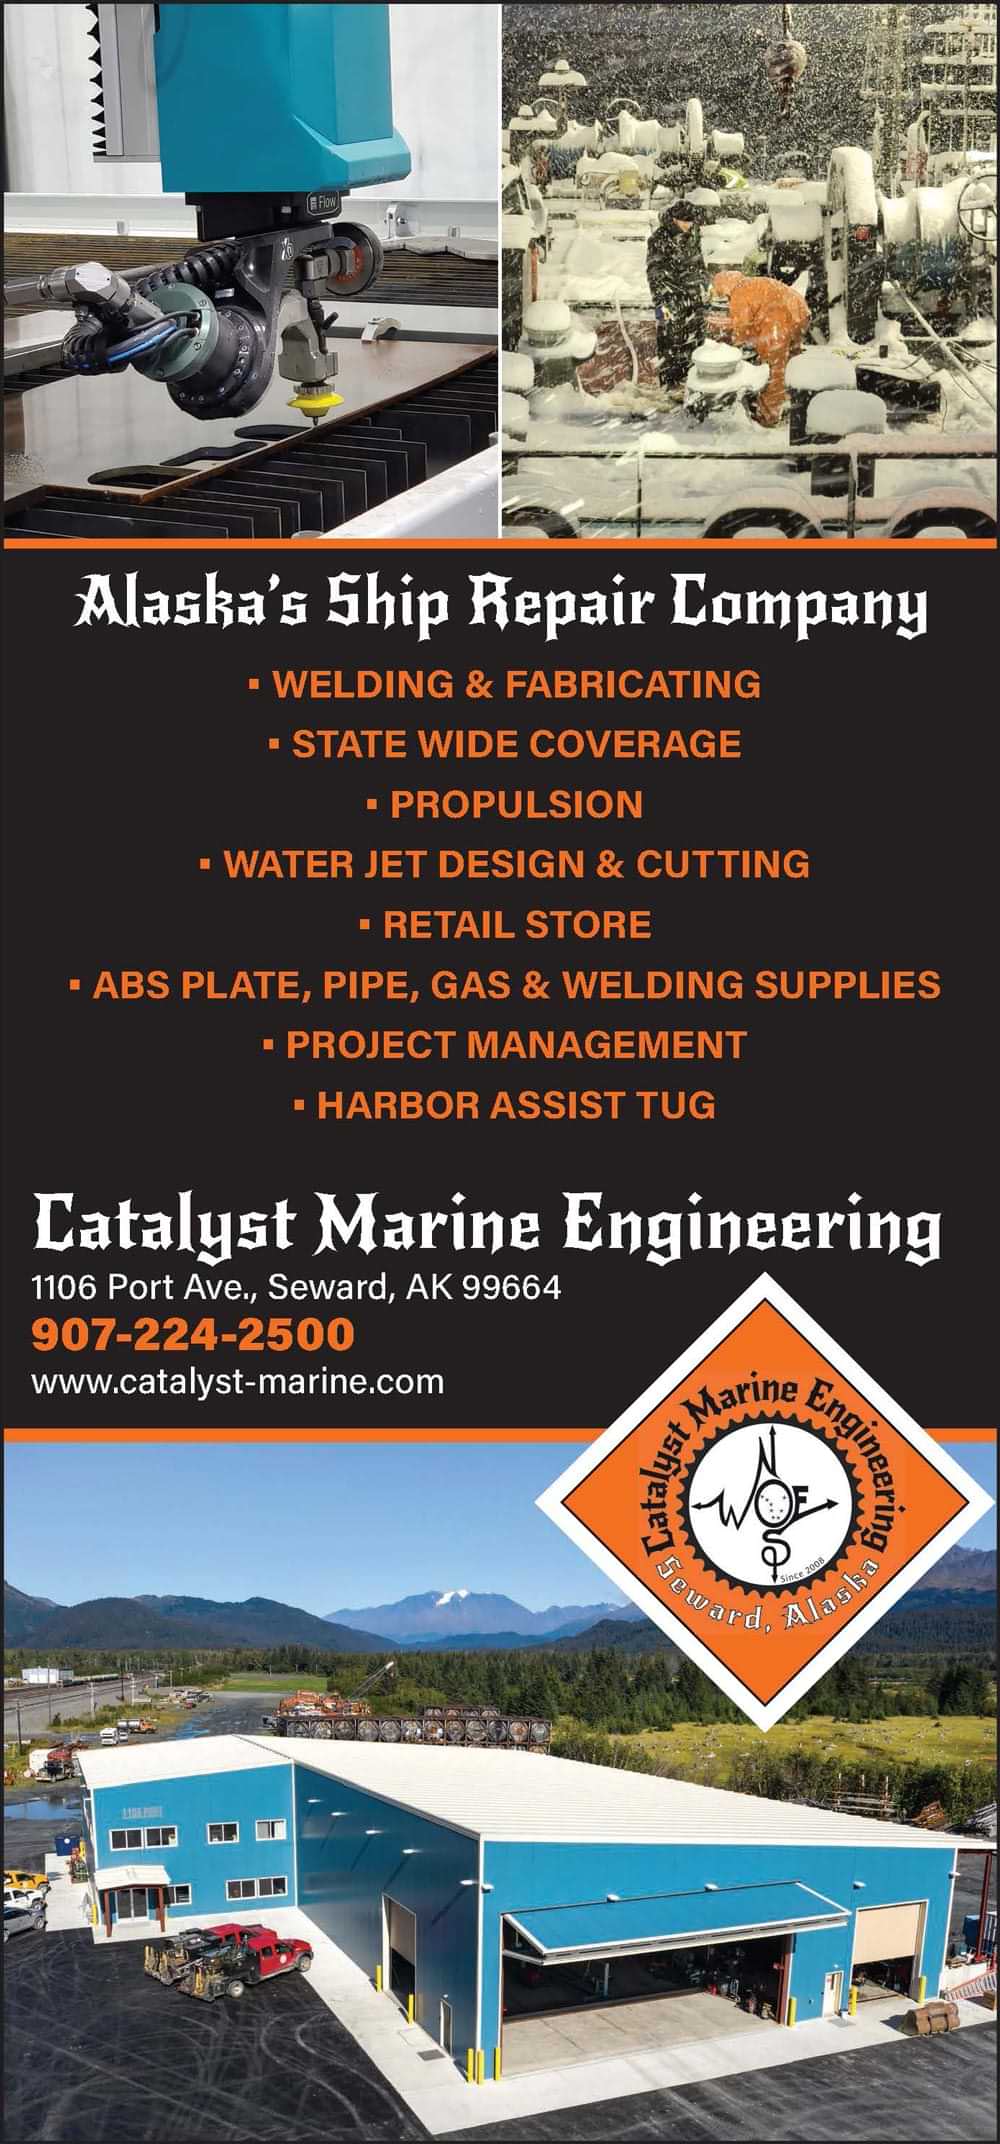 Catalyst Marine Engineering Advertisement